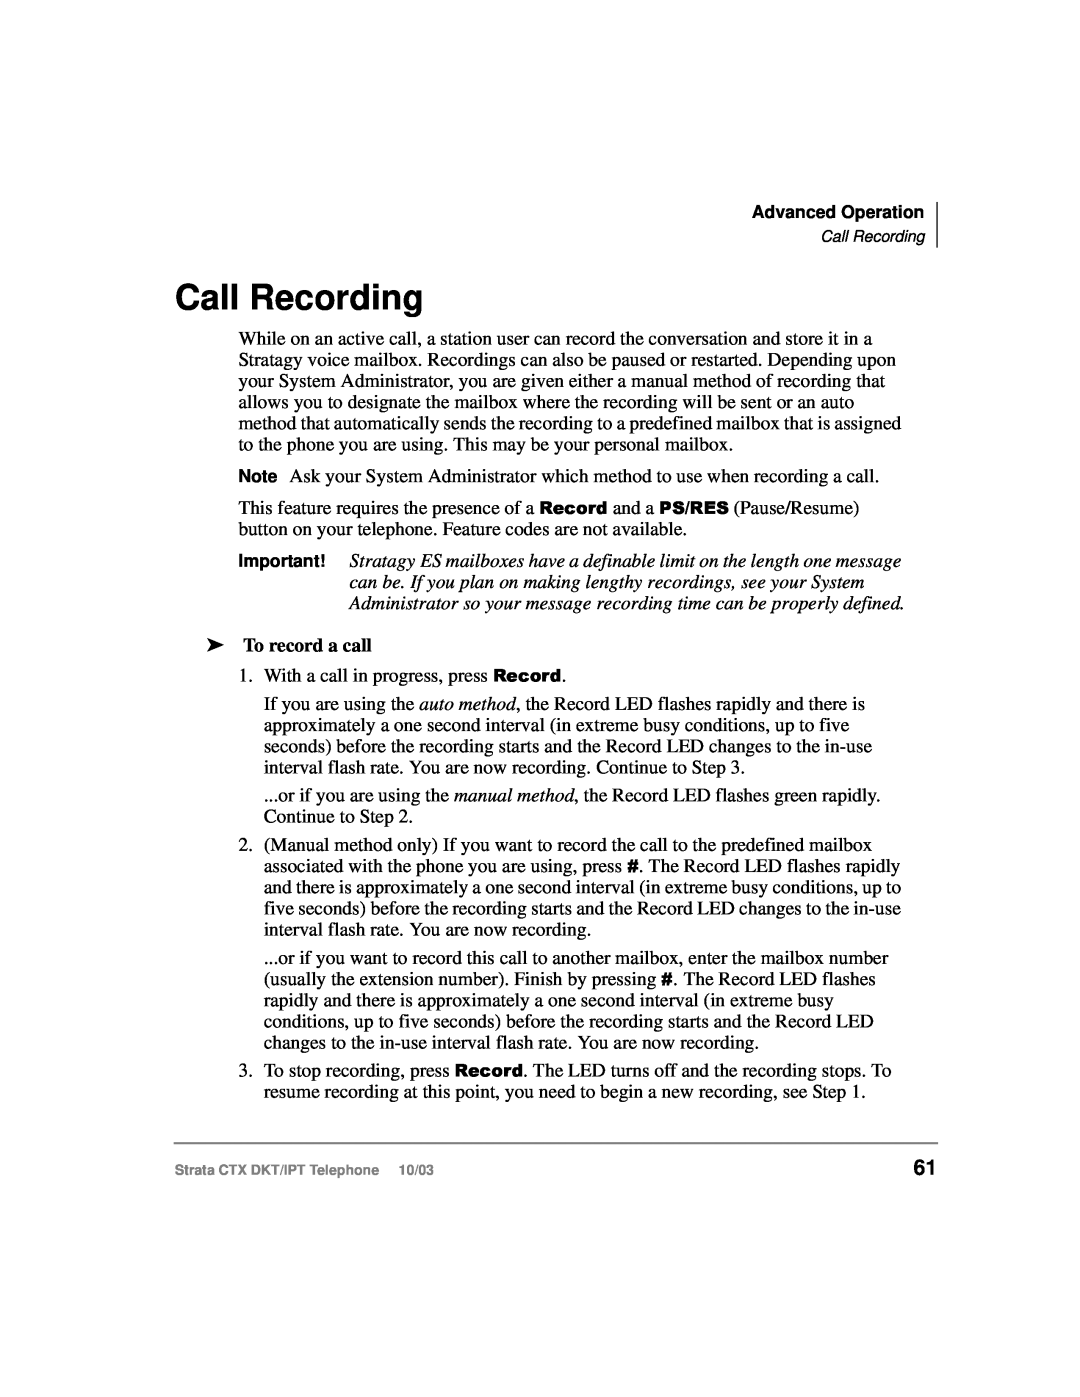 Toshiba DKT, IPT manual Call Recording, To record a call 